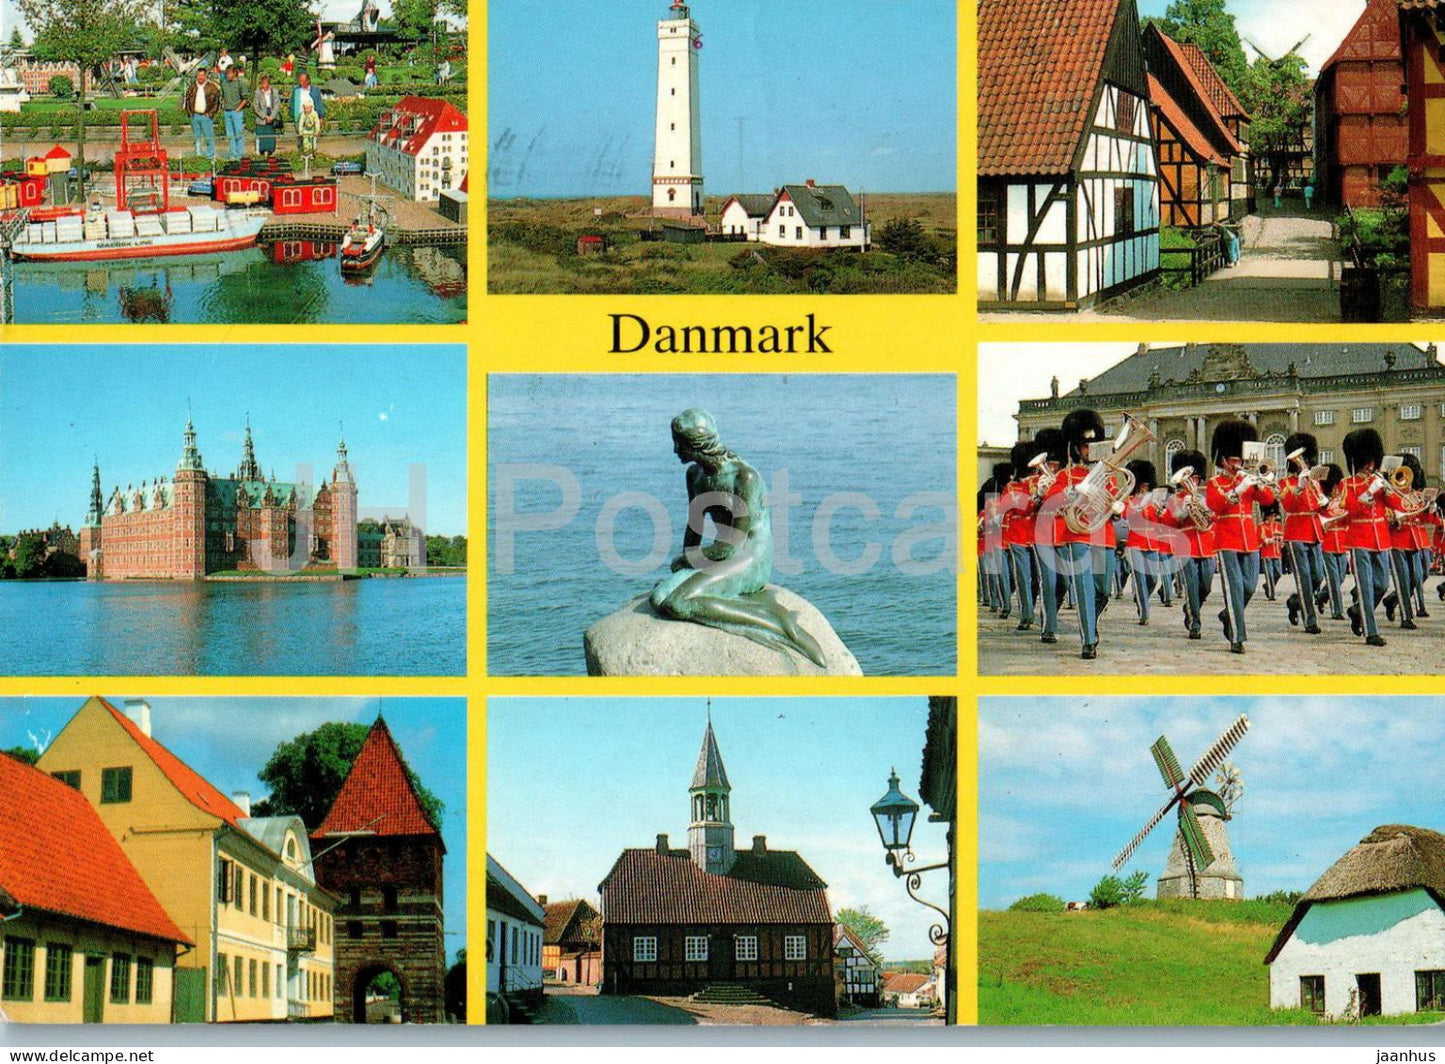 Legoland - Little Mermaid - lighthouse - windmill - Royal Guard - castle - multiview - DK 16 - Denmark - used - JH Postcards